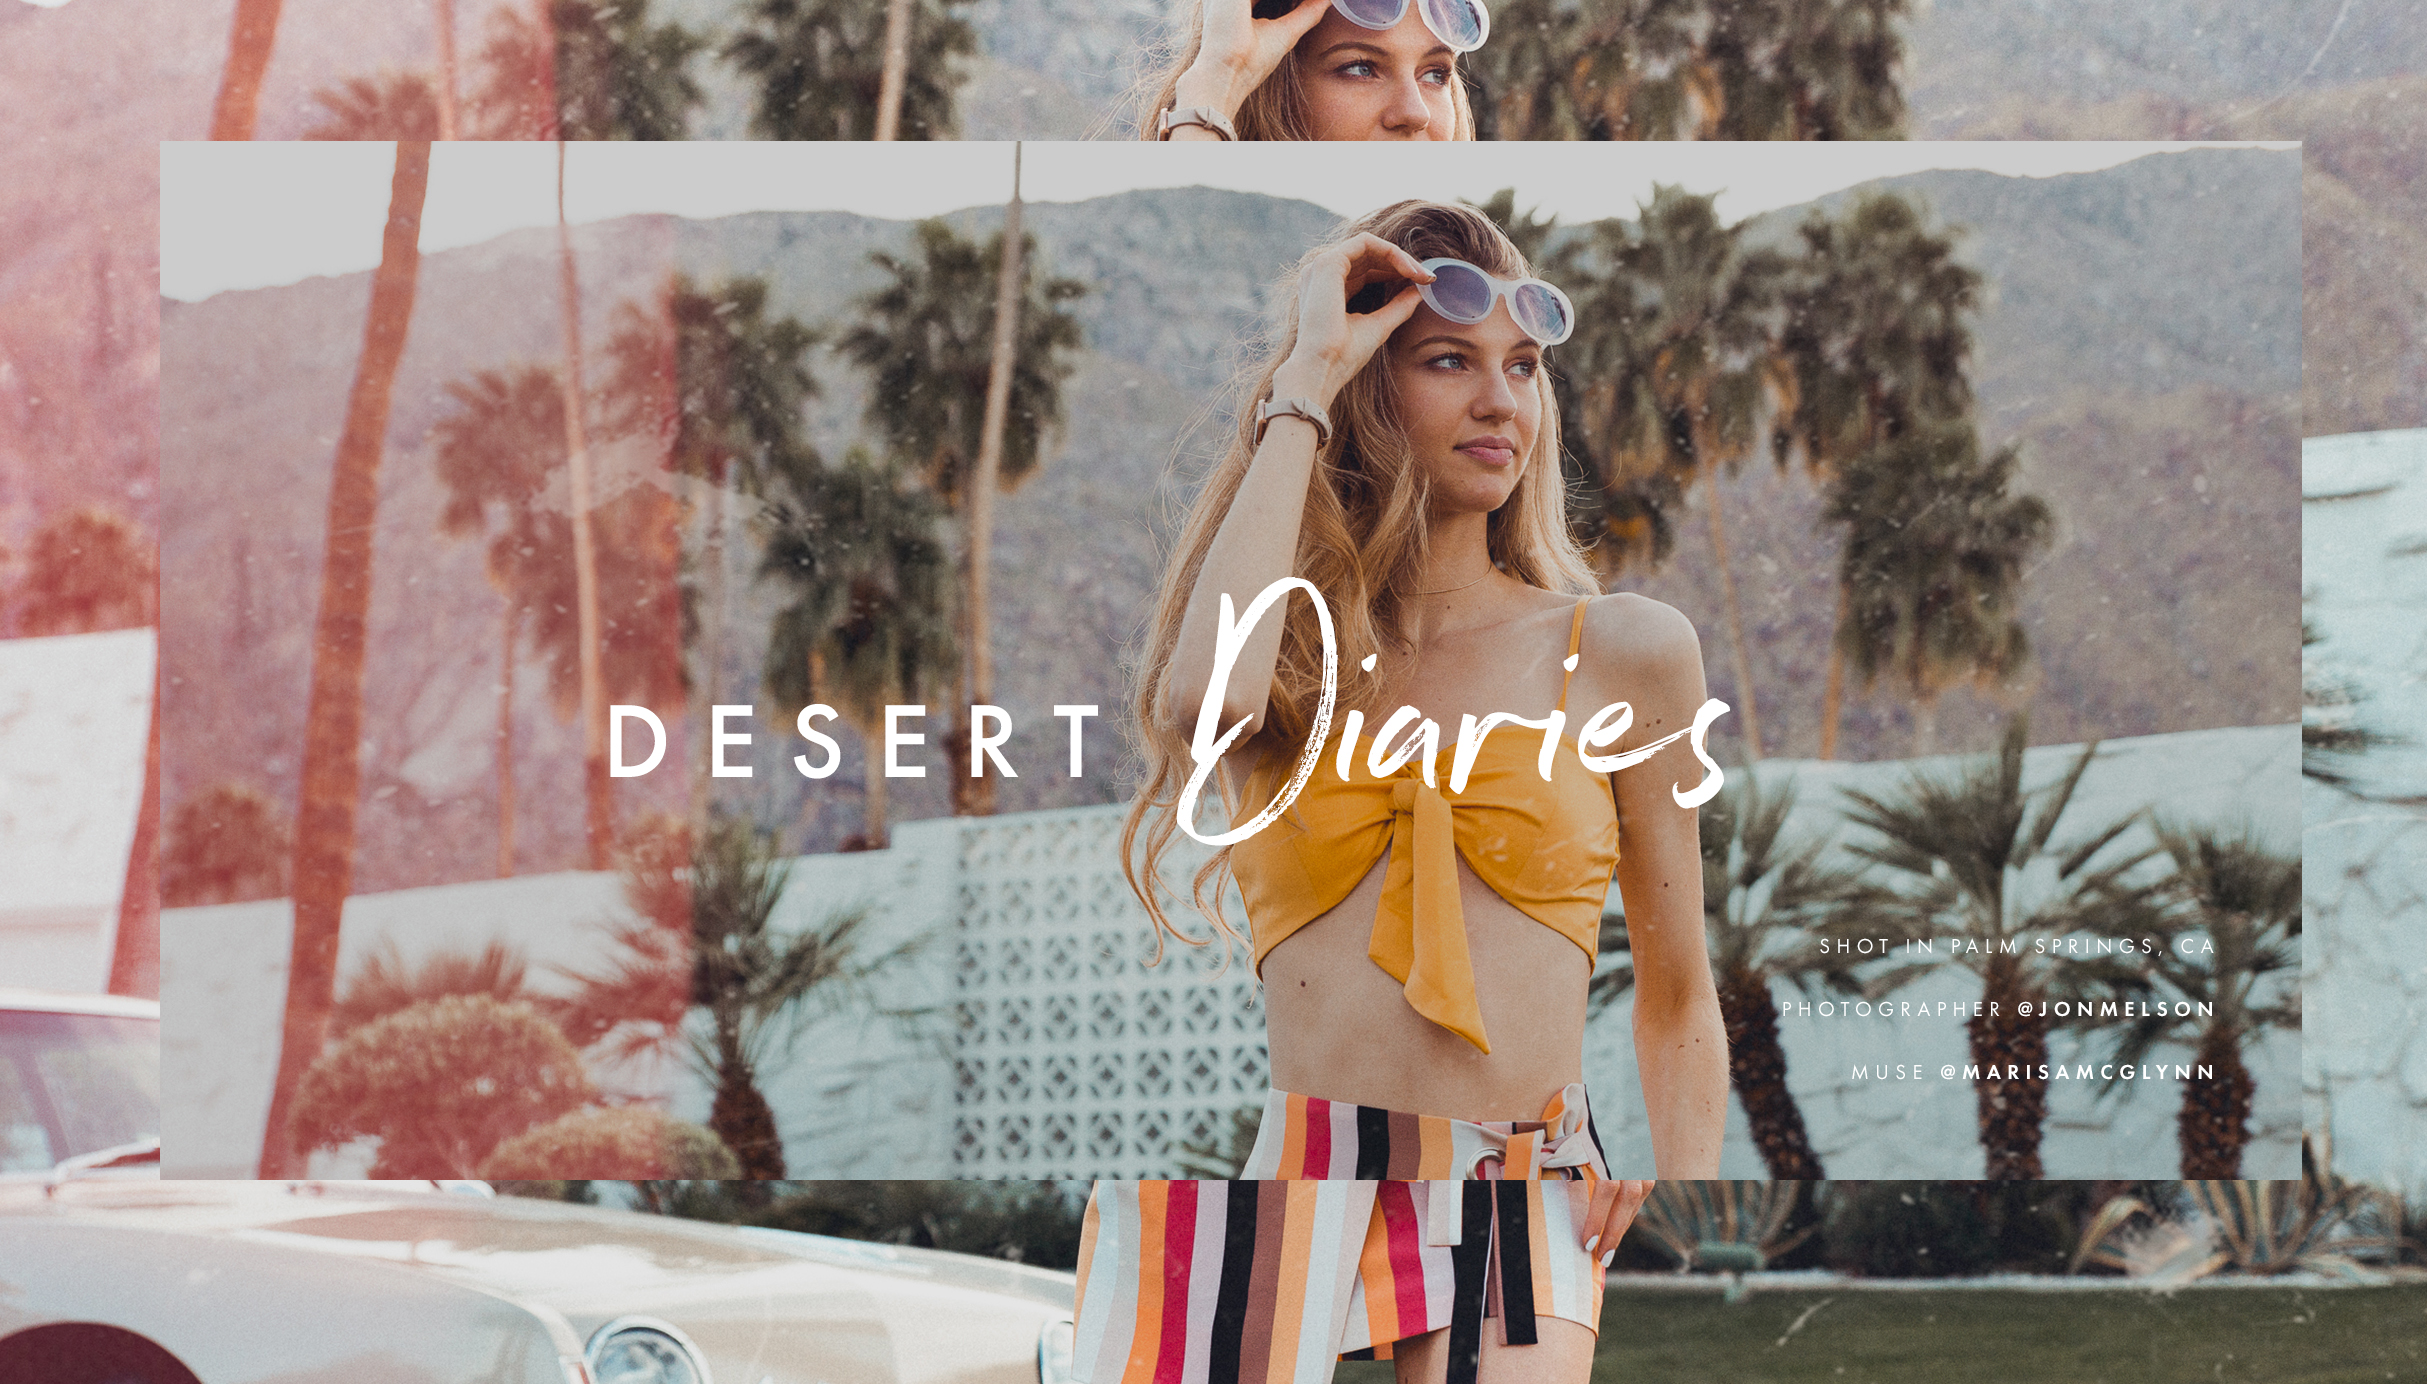 Desert Diaries. Shot in Palm Springs, CA. Photographer @jonmelson Muse @marisacglynn